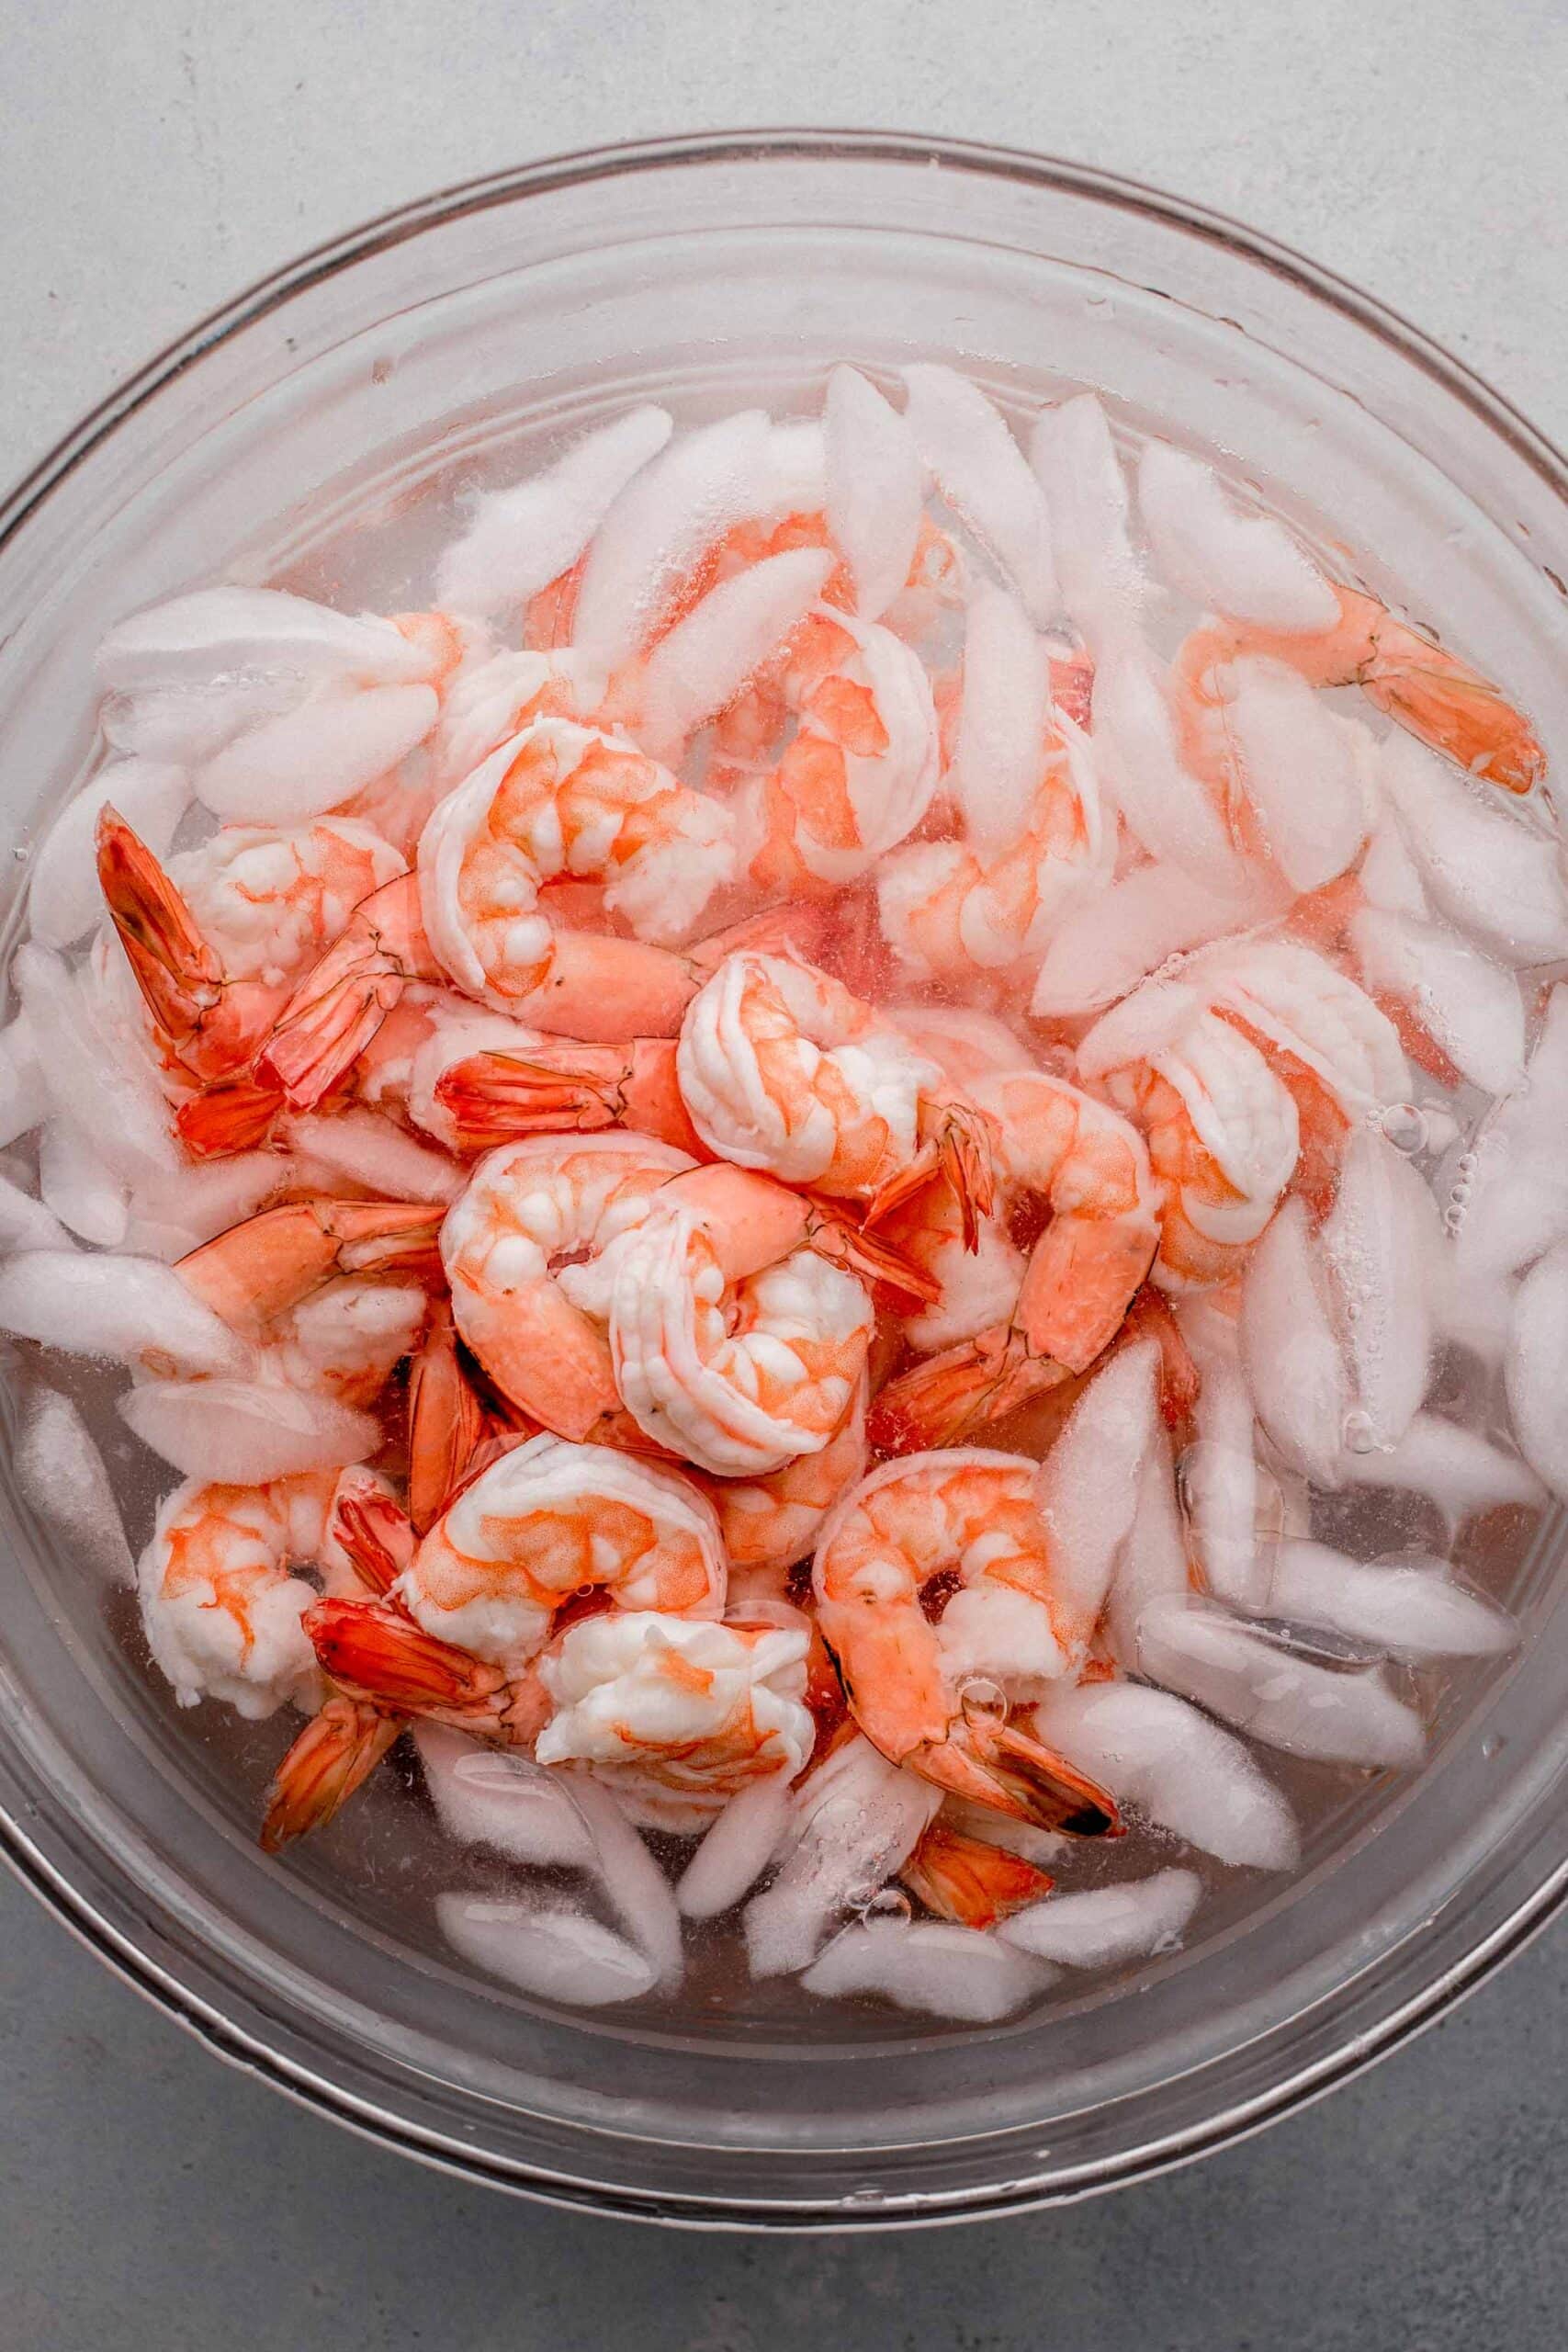 Boiled shrimp in ice bath.